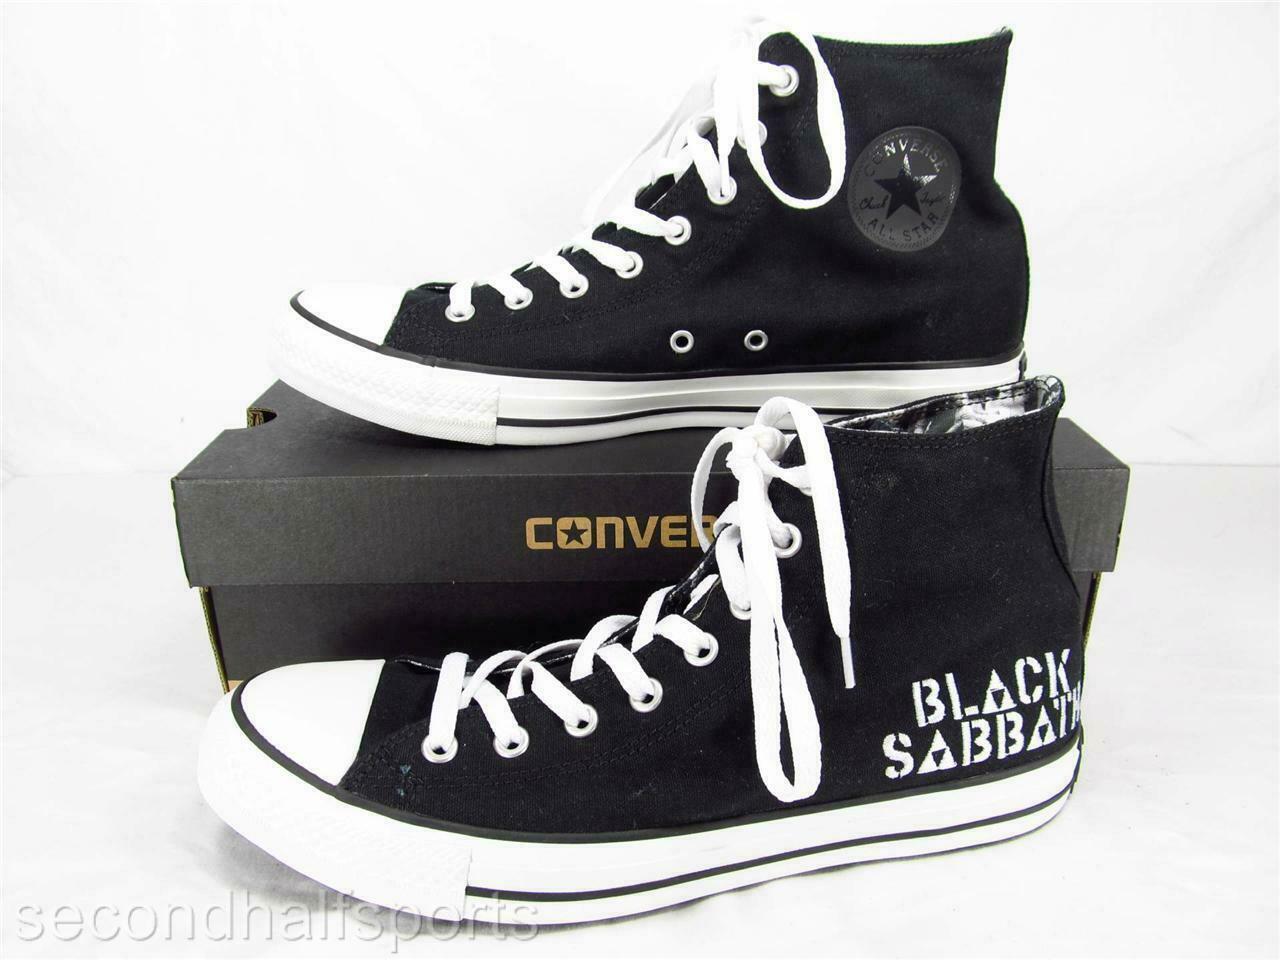 black sabbath dc shoes